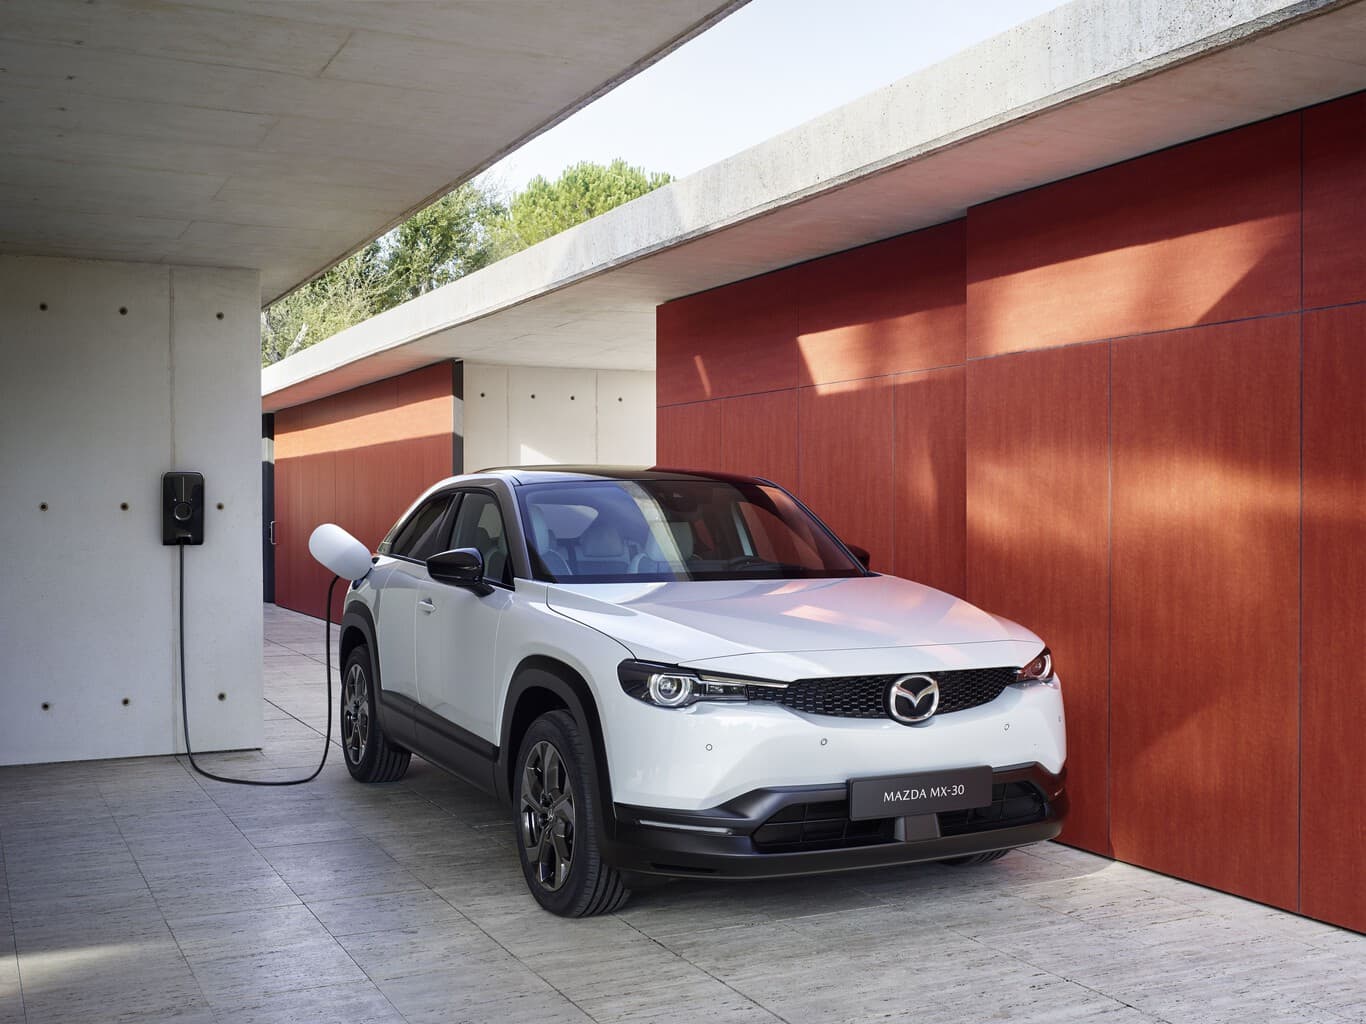 Mazda planea construir autos eléctricos en México para 2028, según su CEO